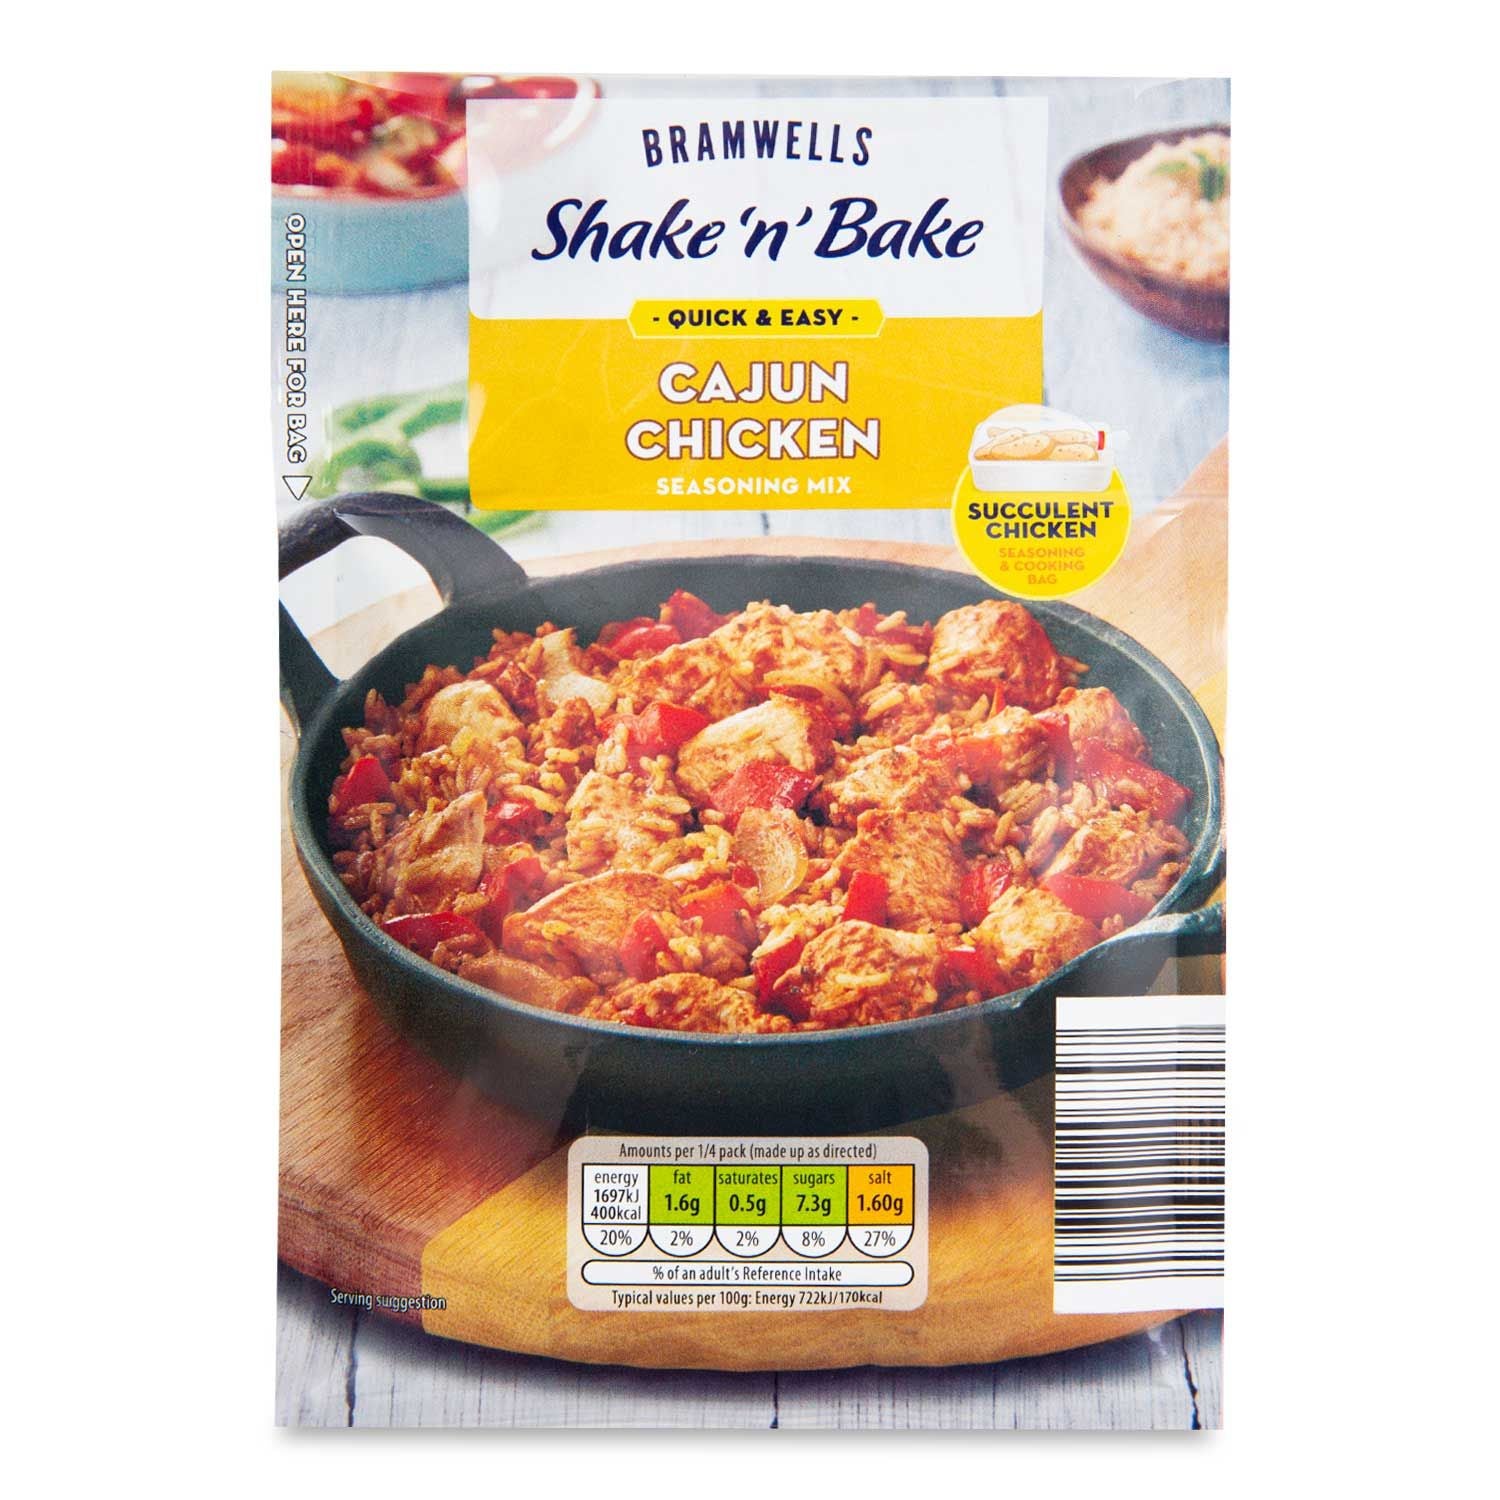 Bramwells Shake 'N' Bake Cajun Chicken Seasoning Mix 45g